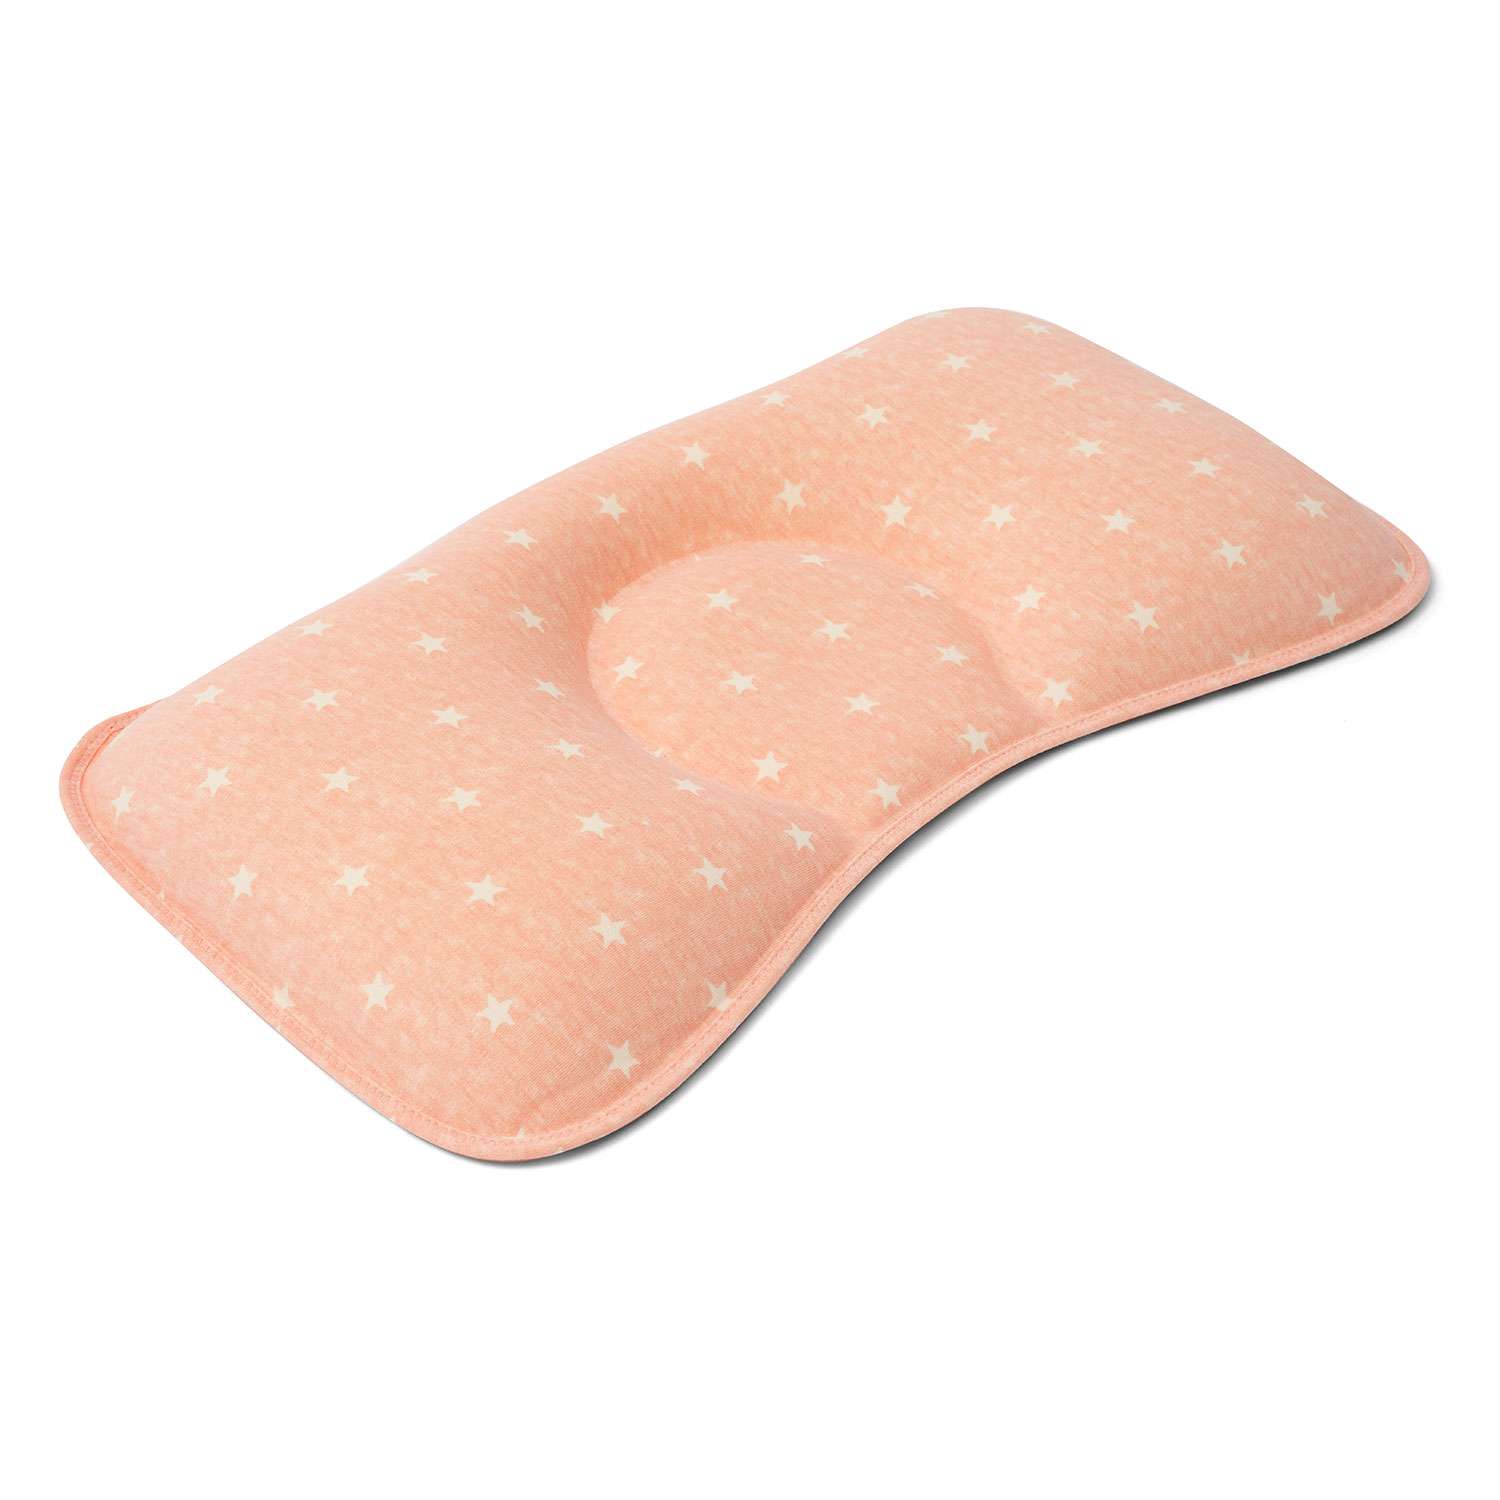 Подушка для новорожденного Nuovita Neonutti Isolotto Dipinto Звезды розовая - фото 1